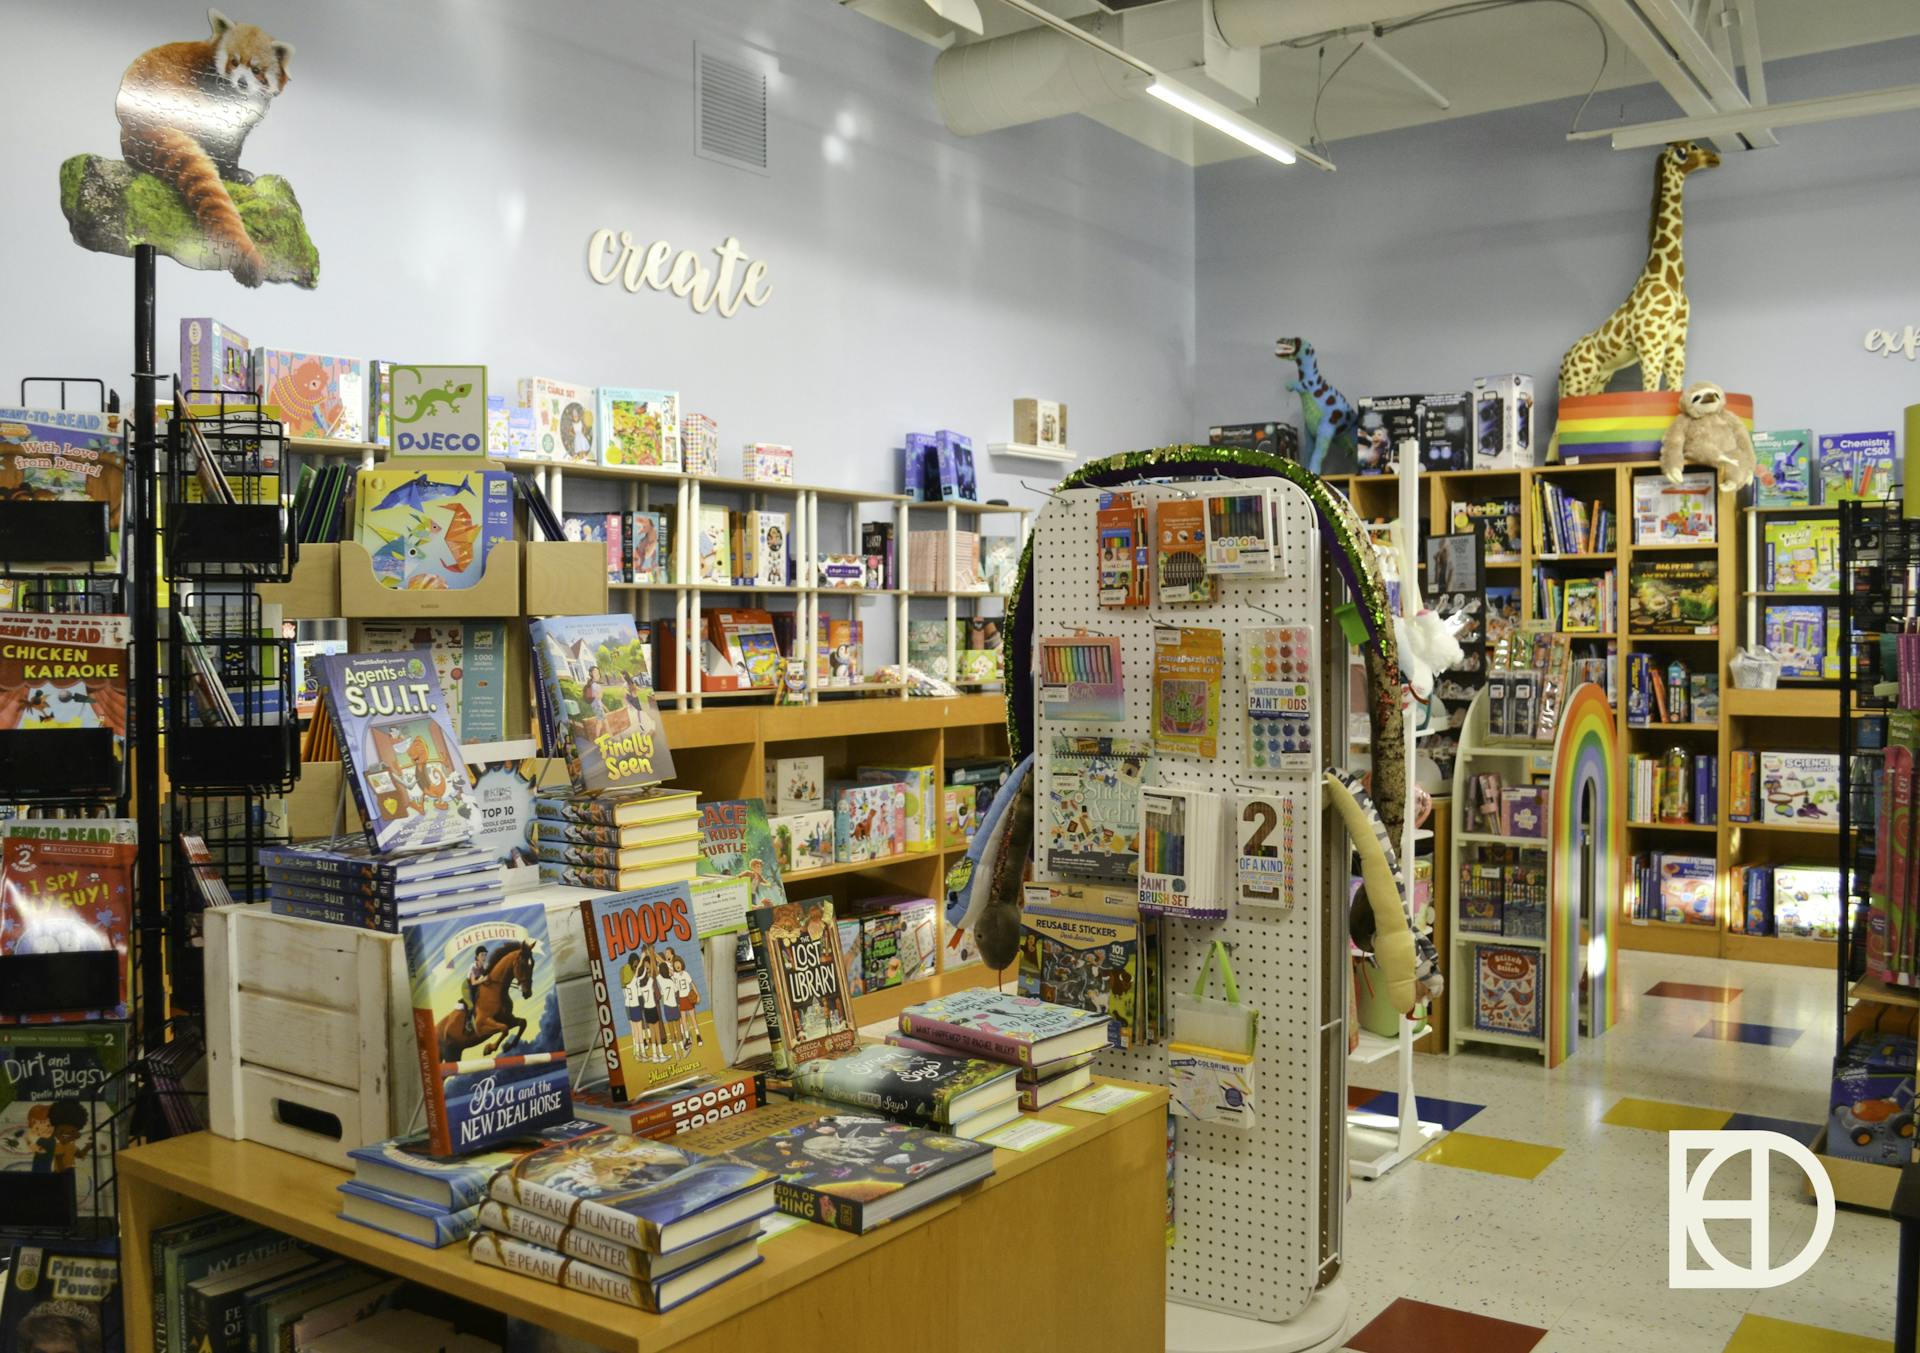 Interior photo of 4 Kids Books & Toys, showing bookshelves